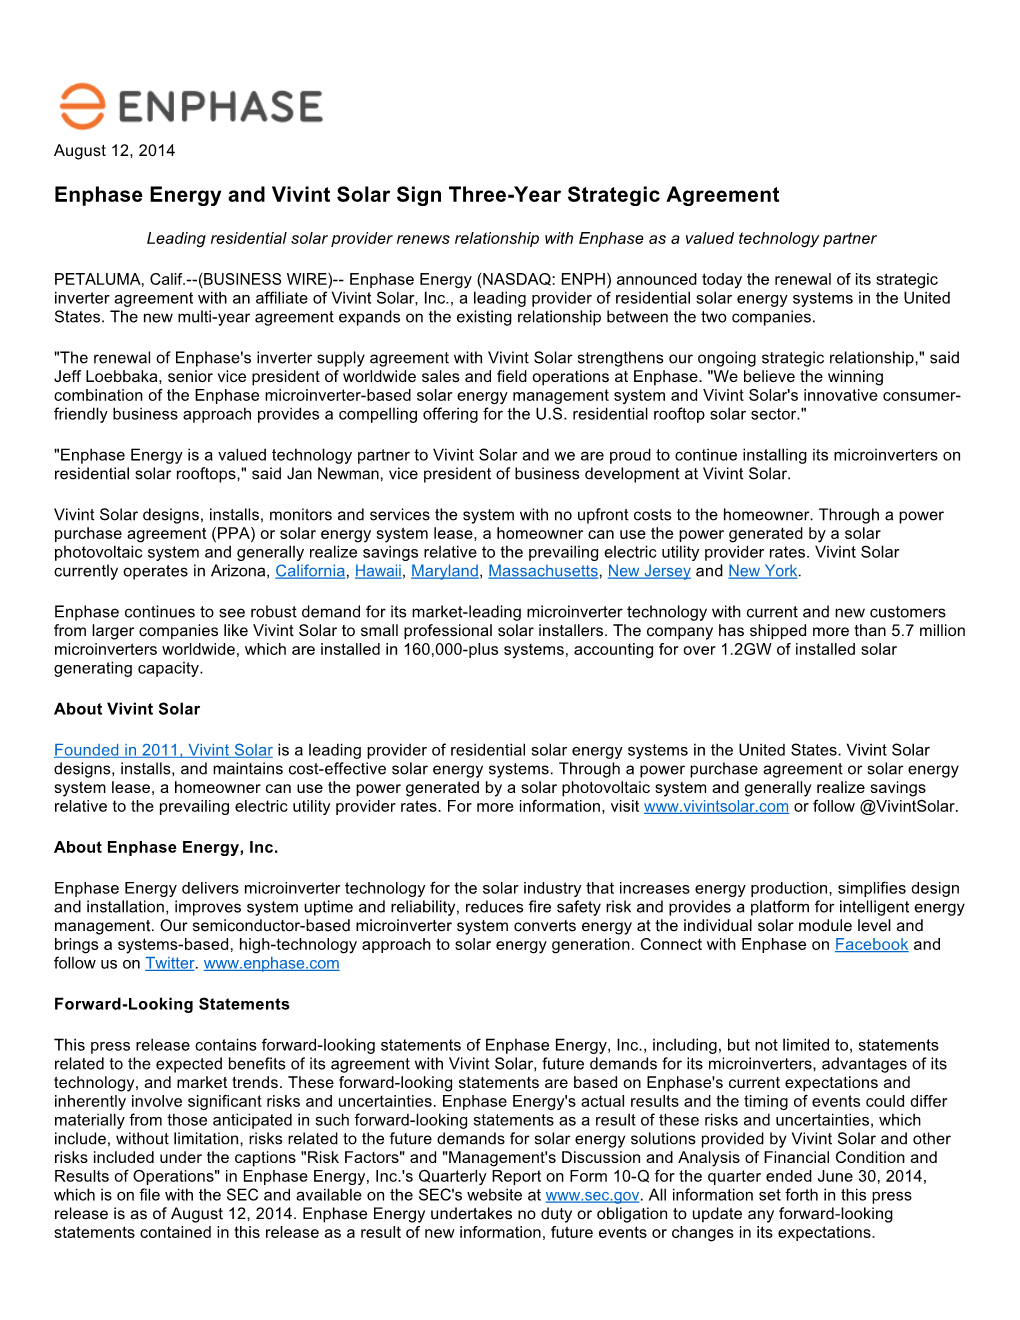 Enphase Energy and Vivint Solar Sign Three-Year Strategic Agreement